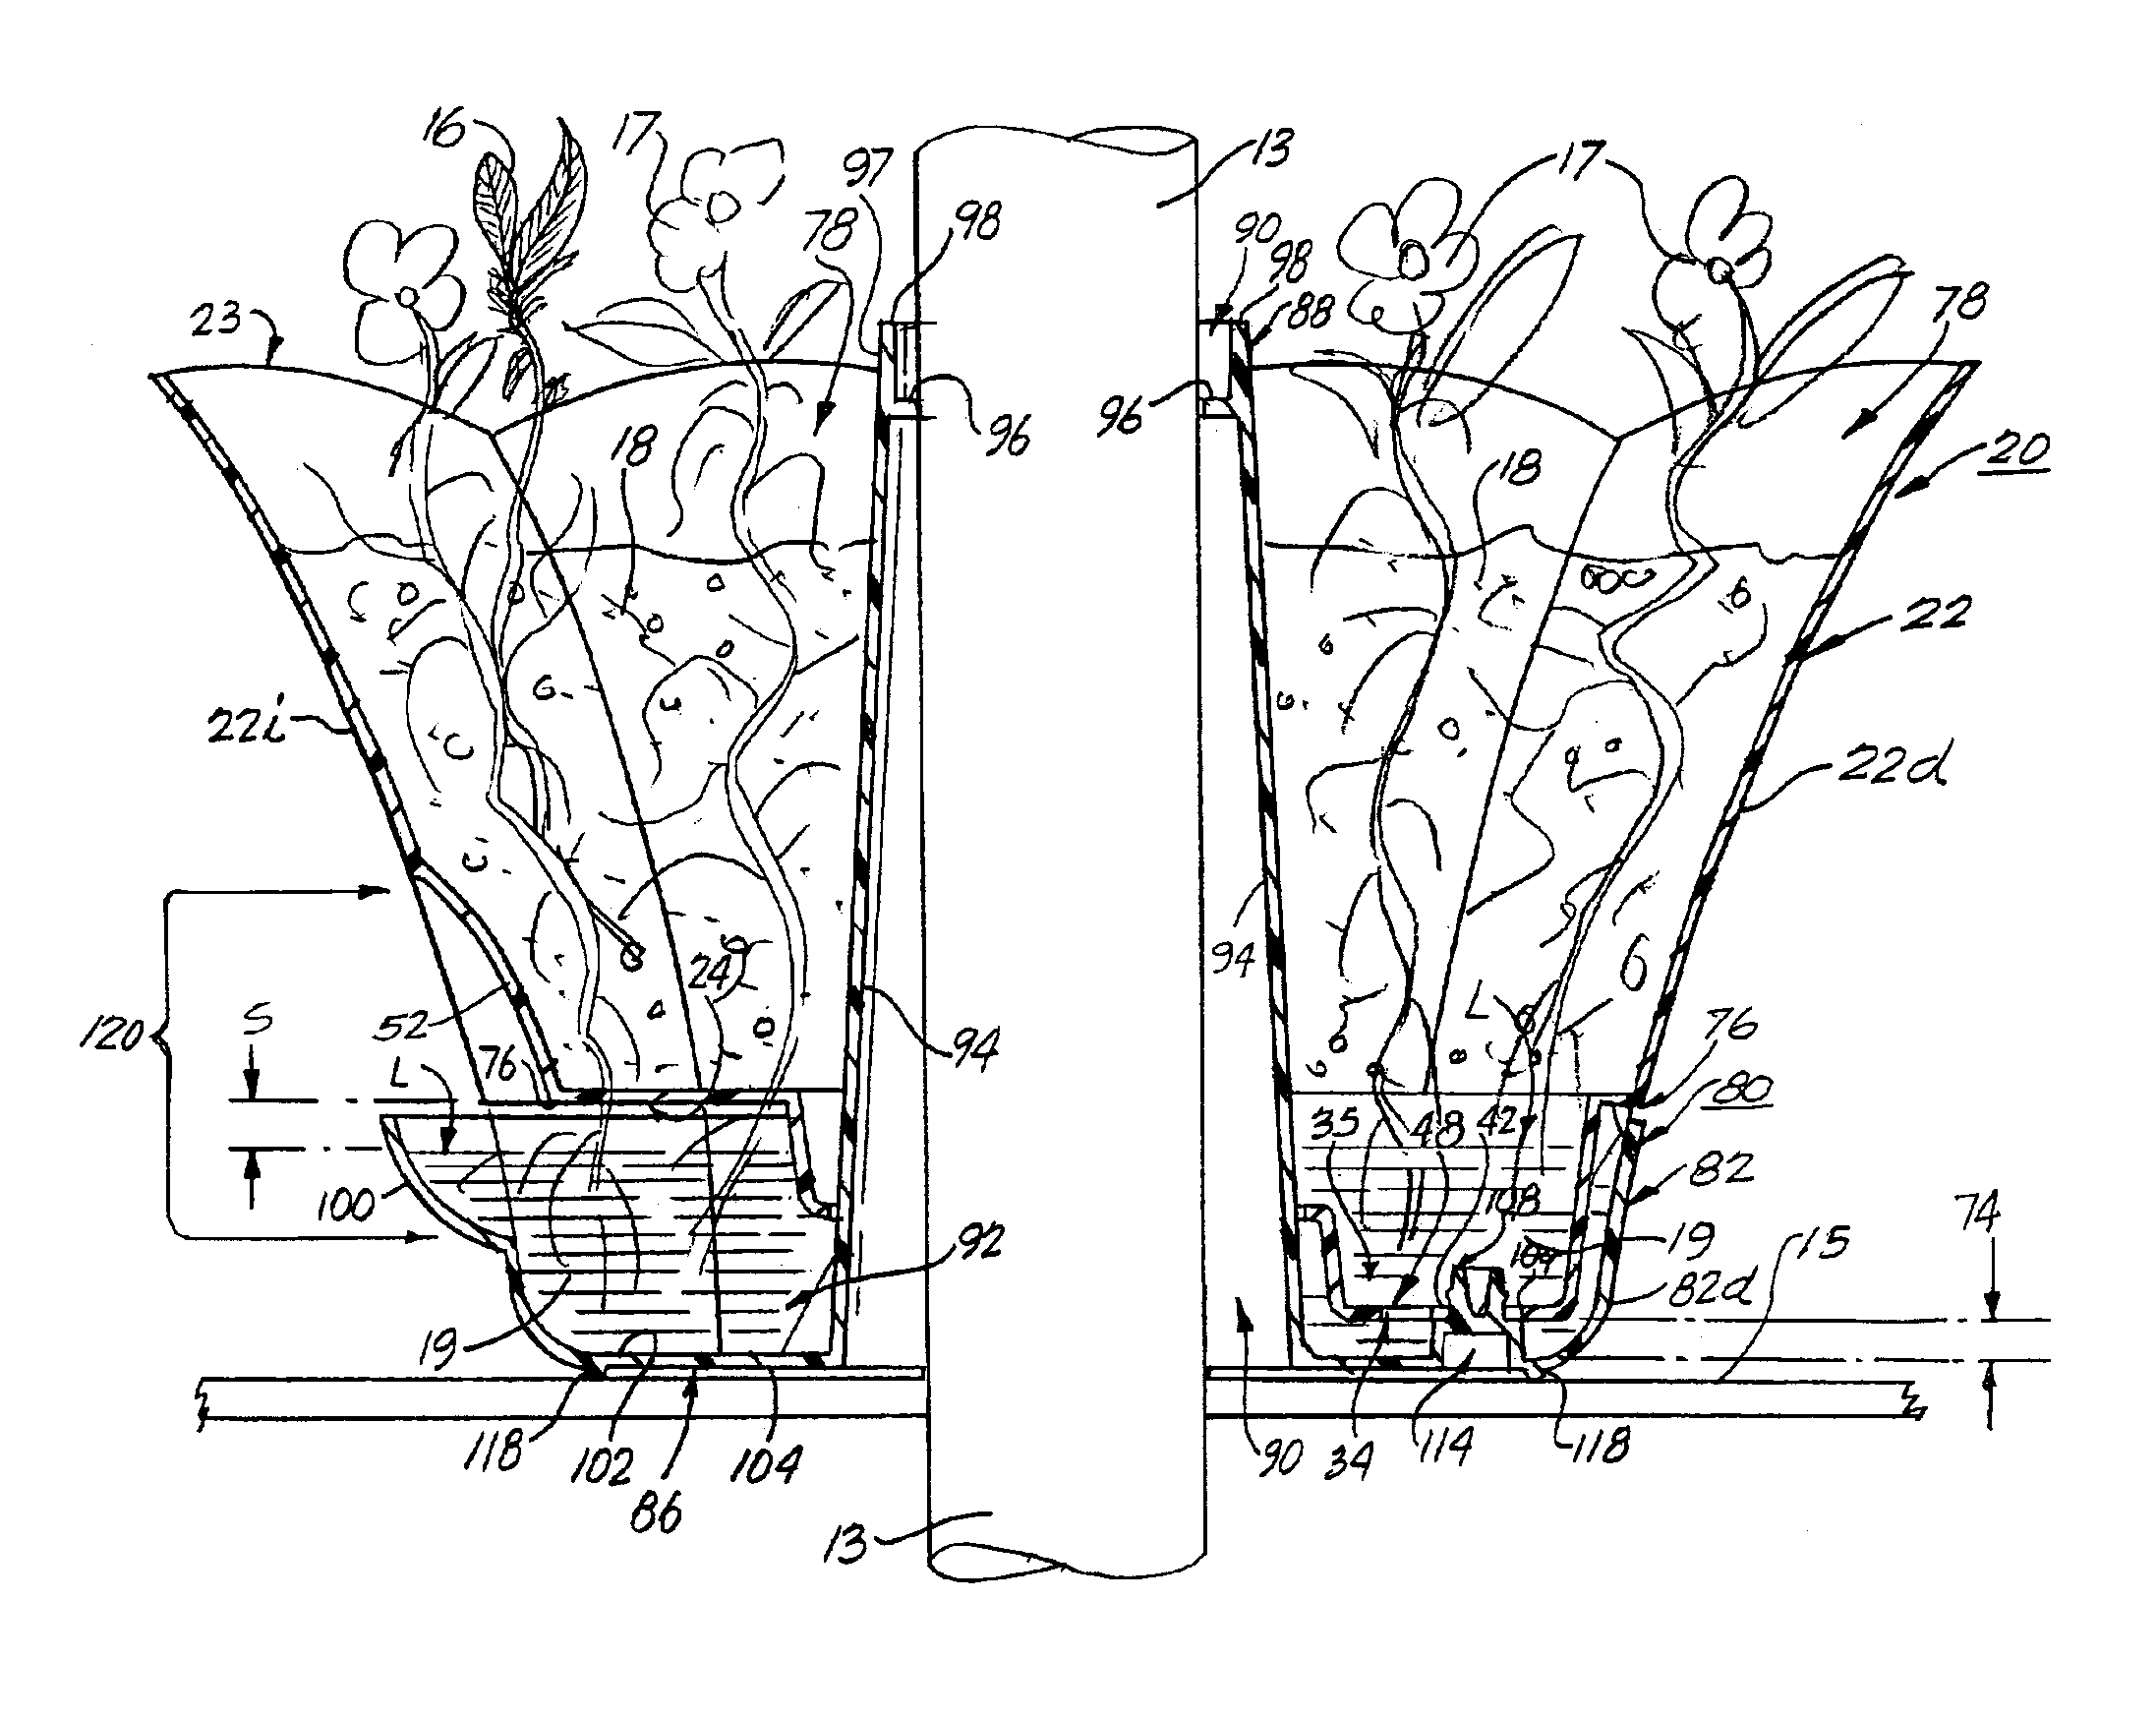 Umbrella planter with a snap-on base